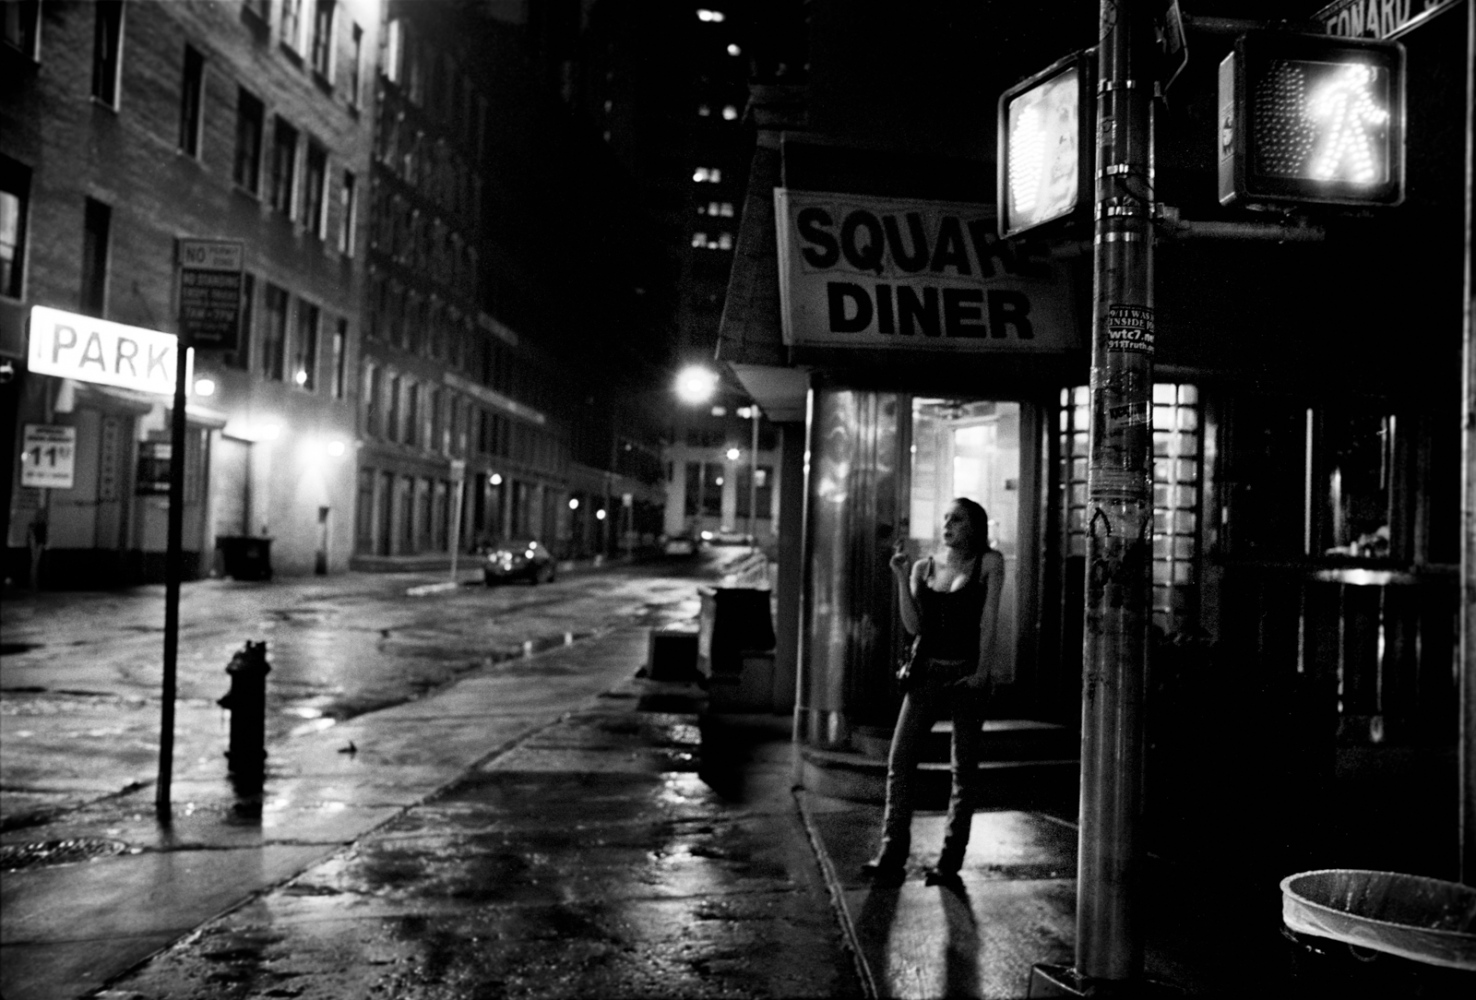 10013 Collection: 2010 - Square Diner, West Broadway & Leonard Street, 2008